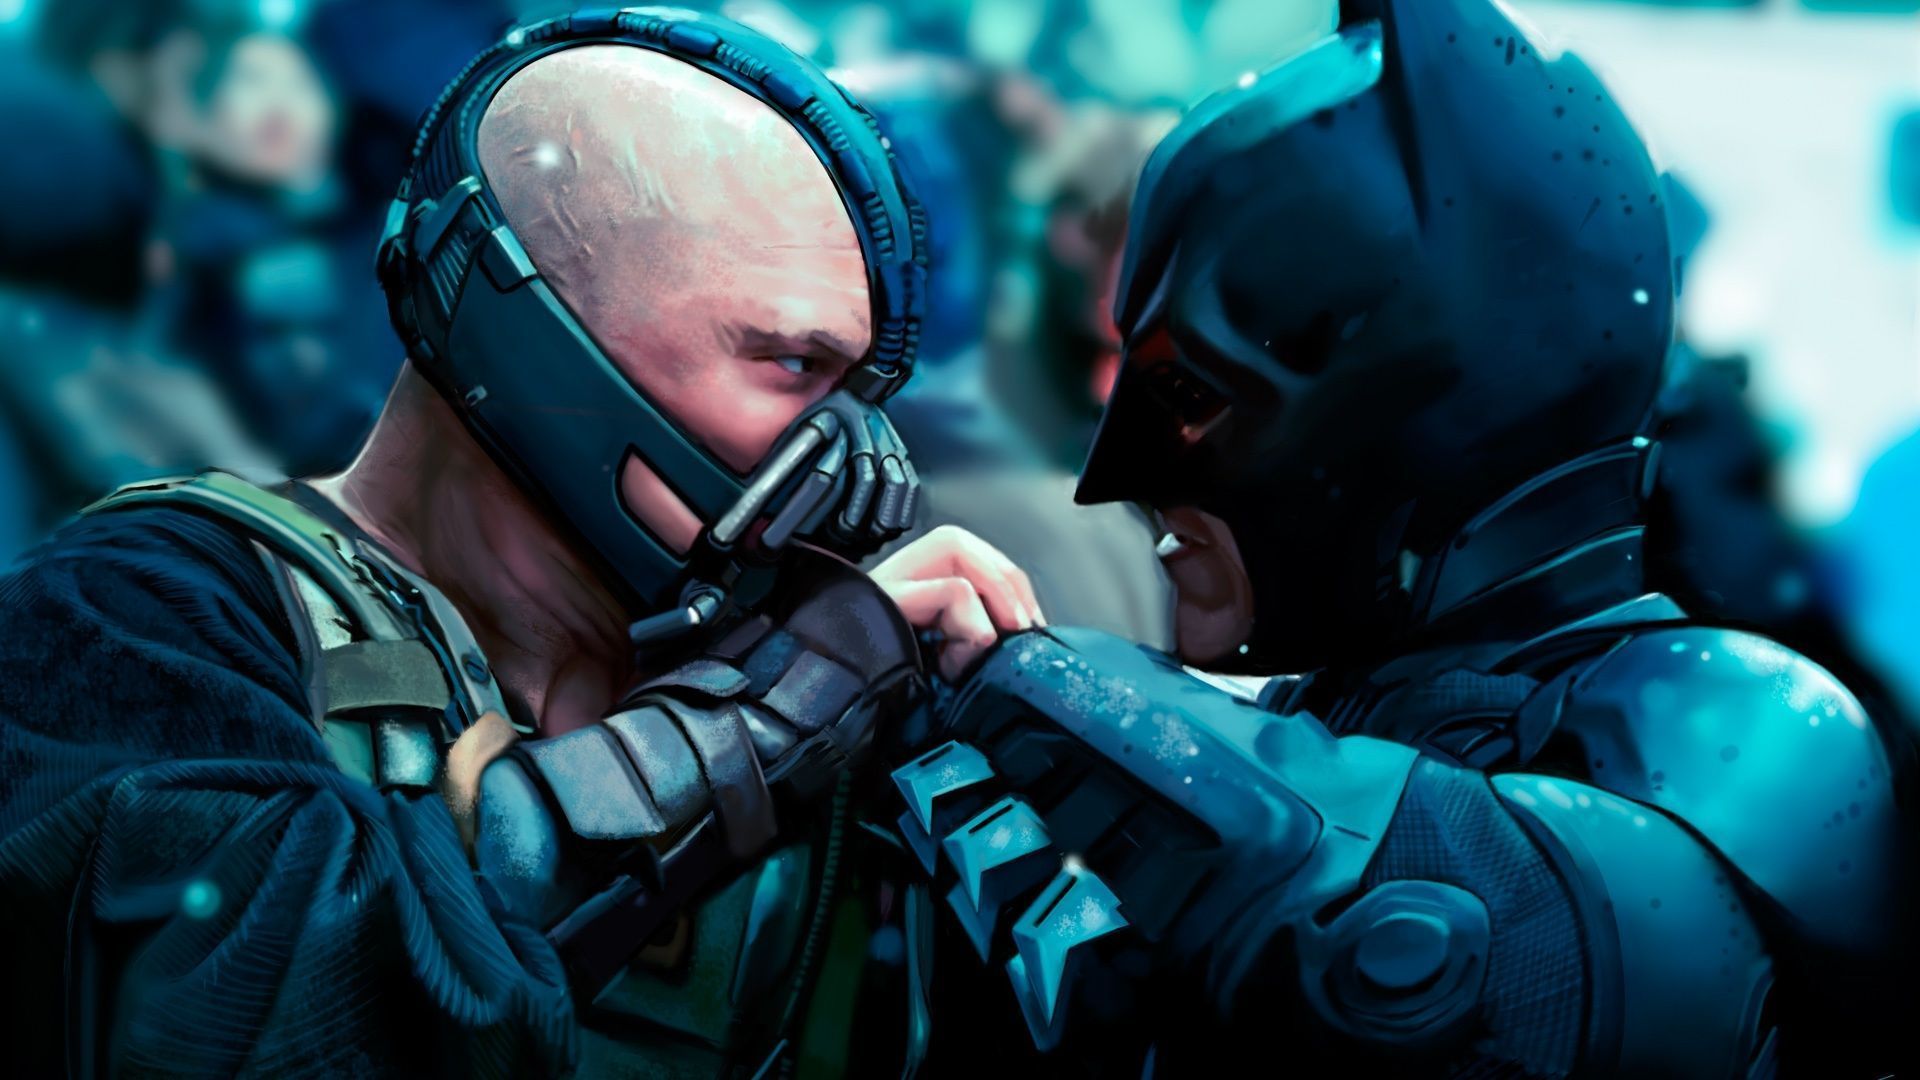 Bane Batman Dark Knight Rises Wallpapers | HD Wallpapers